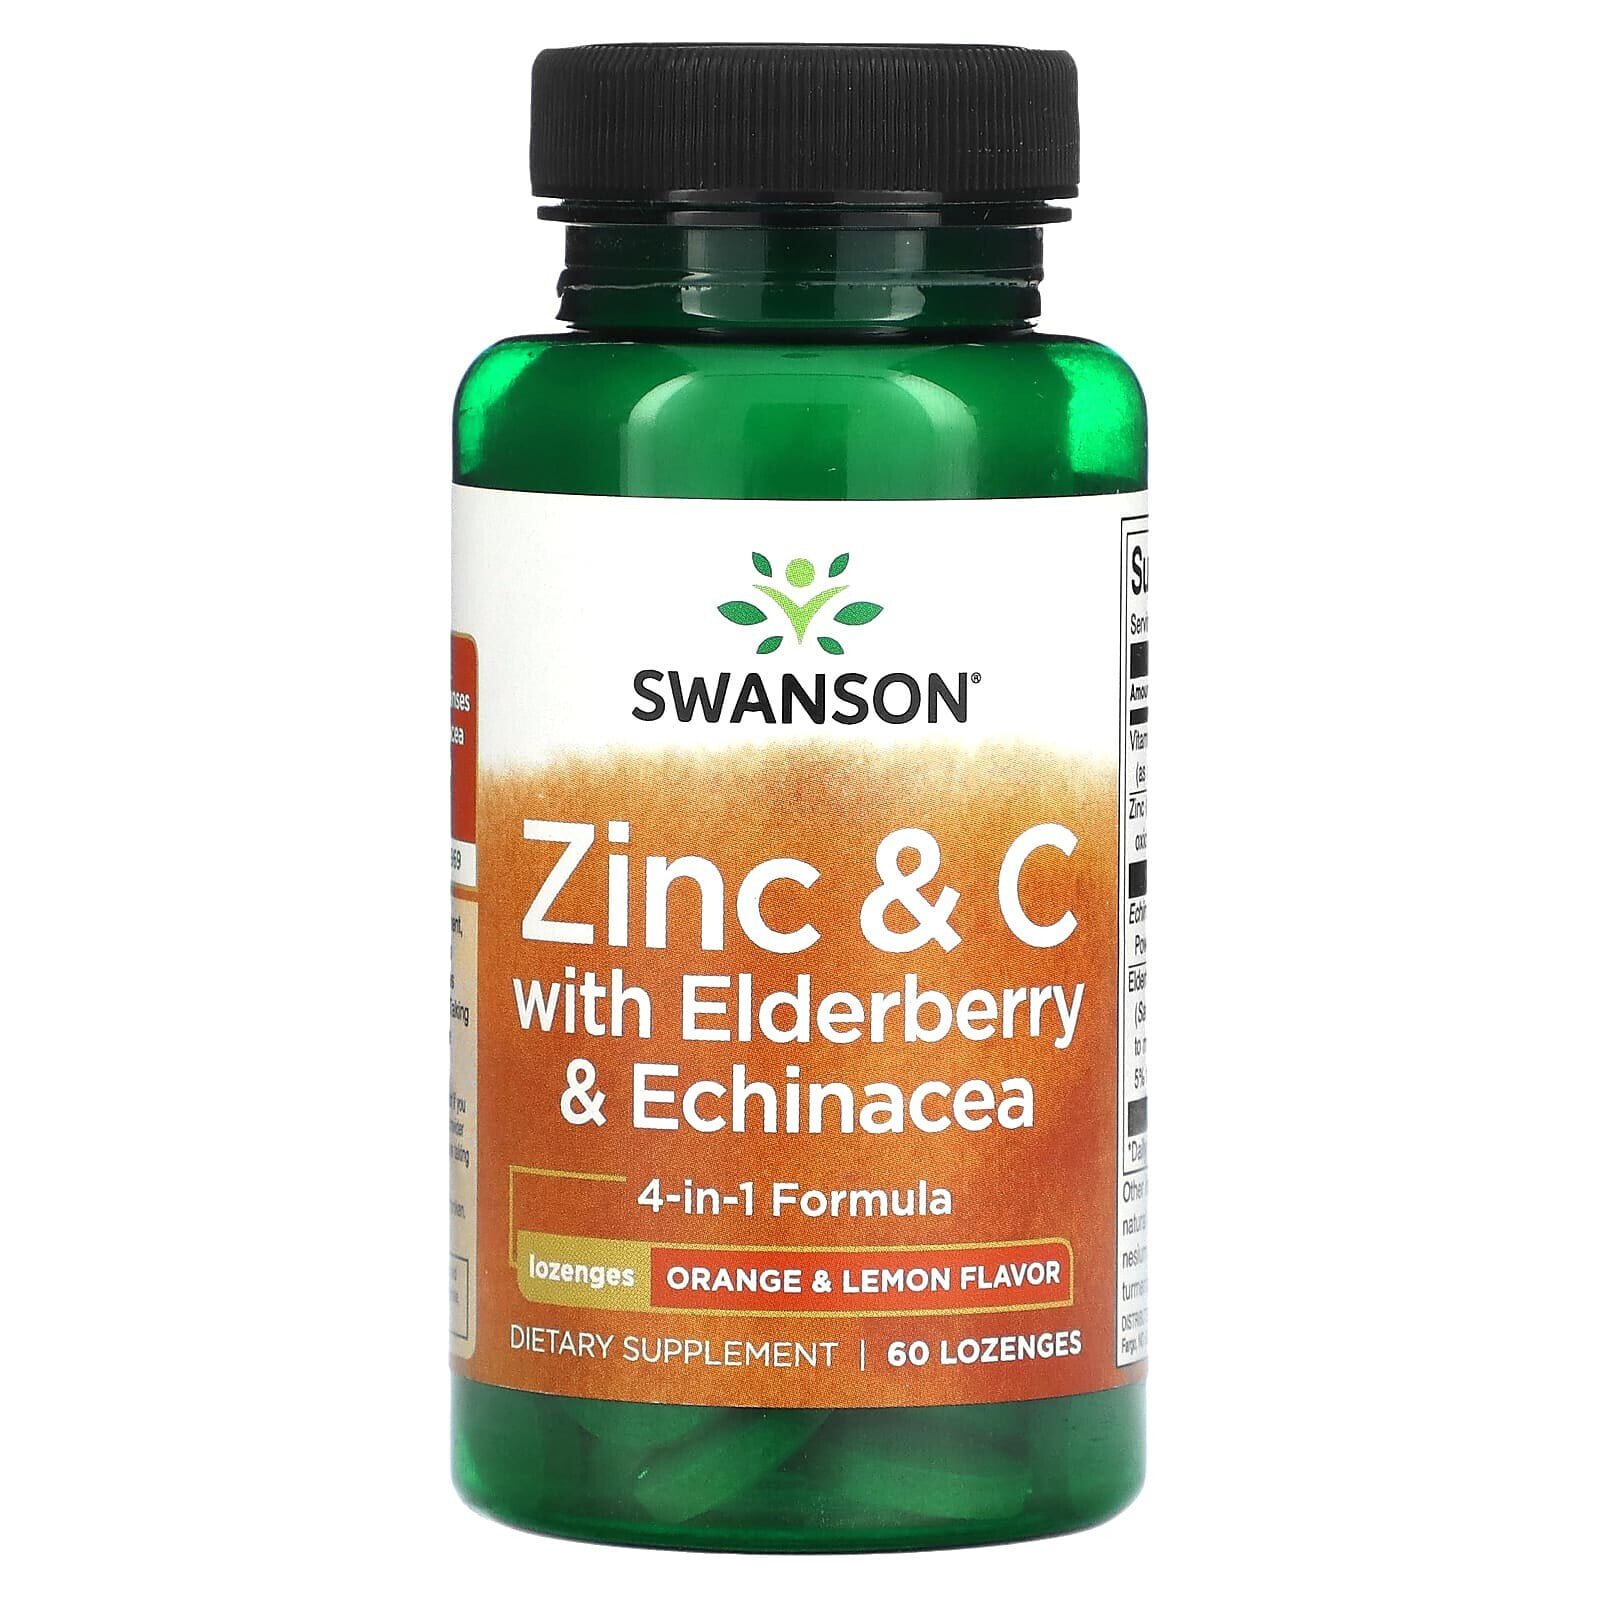 Zinc & C with Elderberry & Echinacea, Orange & Lemon, 60 Lozenges